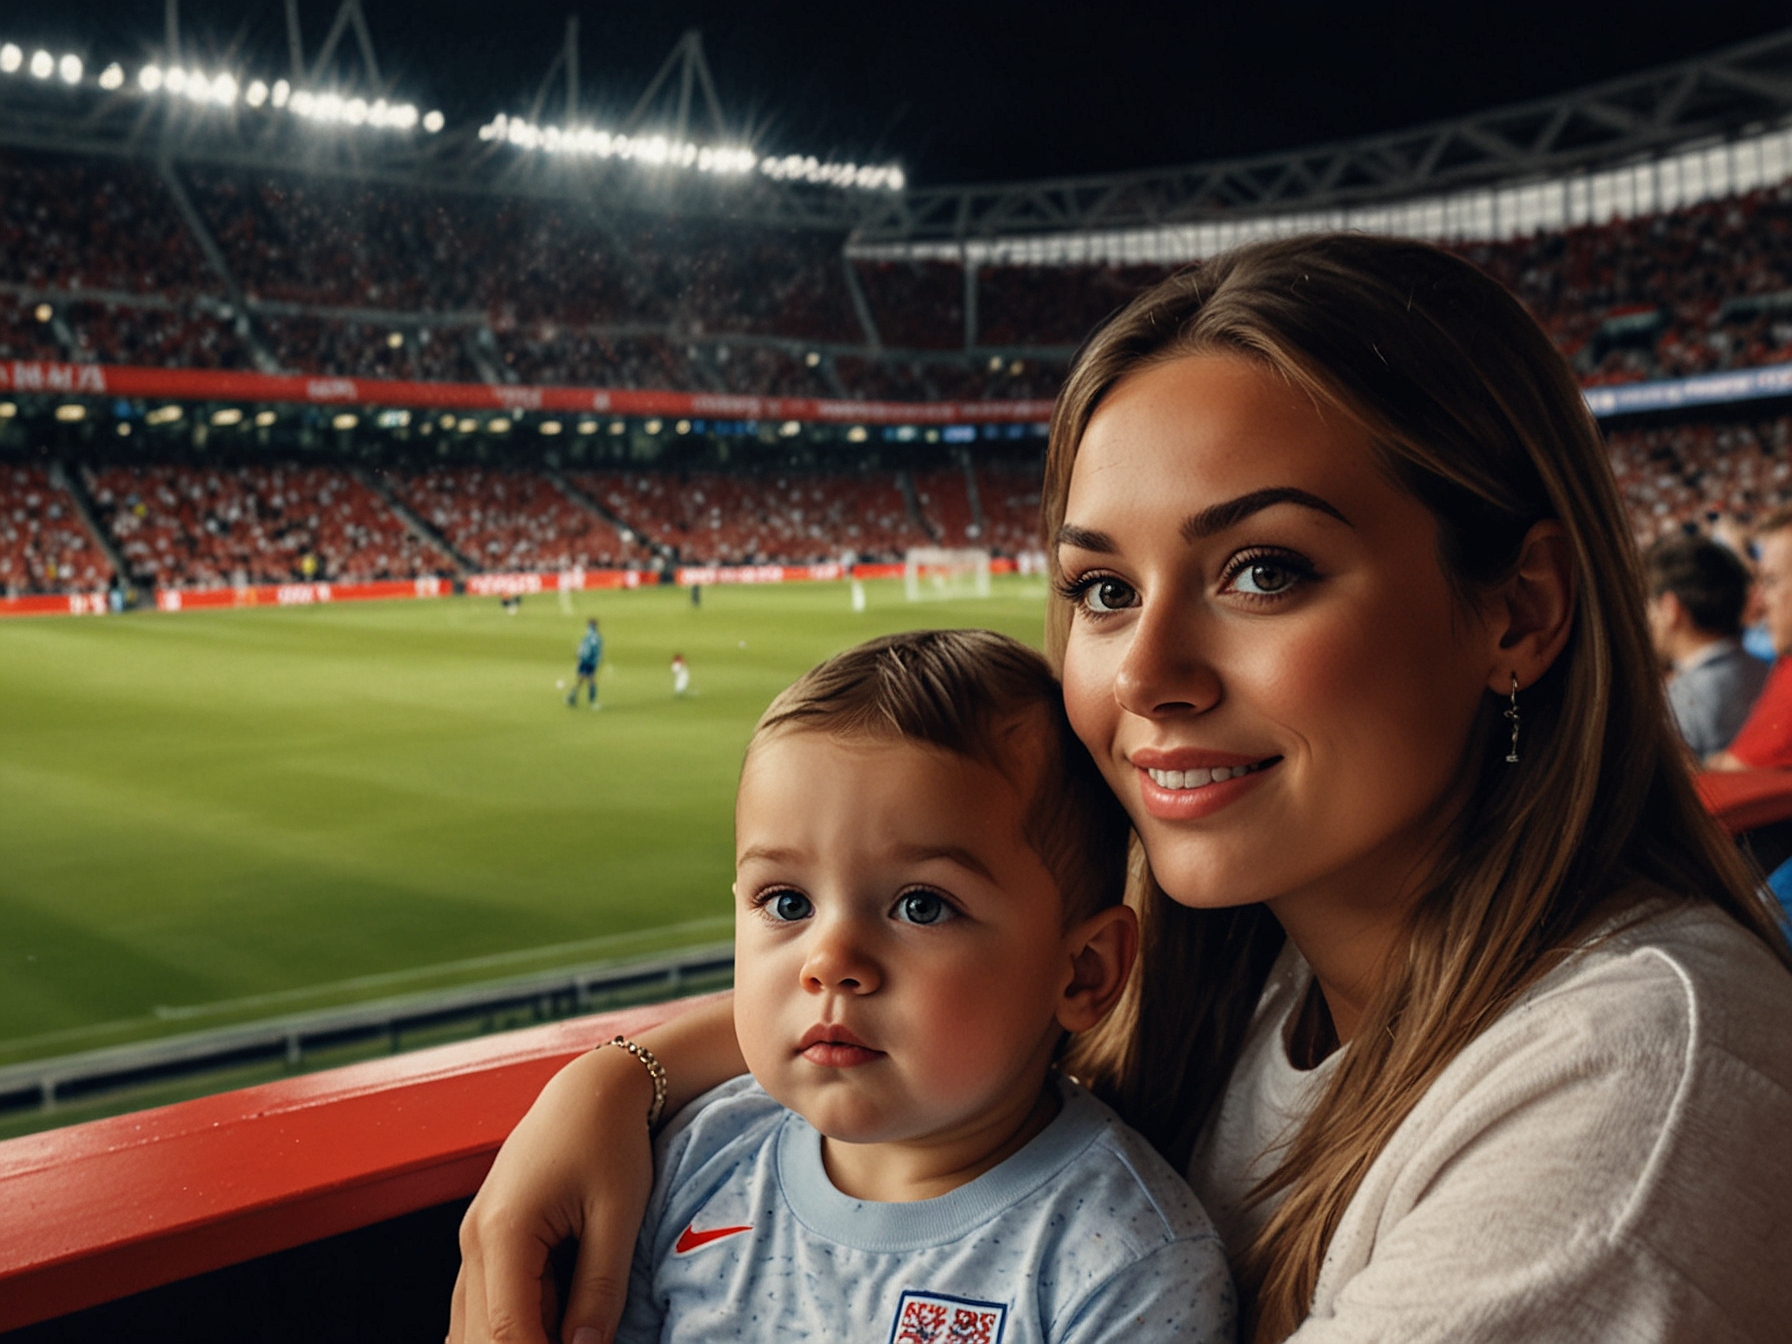 Lauryn Goodman and her son Kairo enjoy the England vs. Denmark game, showcasing a heartwarming moment of family bonding amidst the media frenzy.